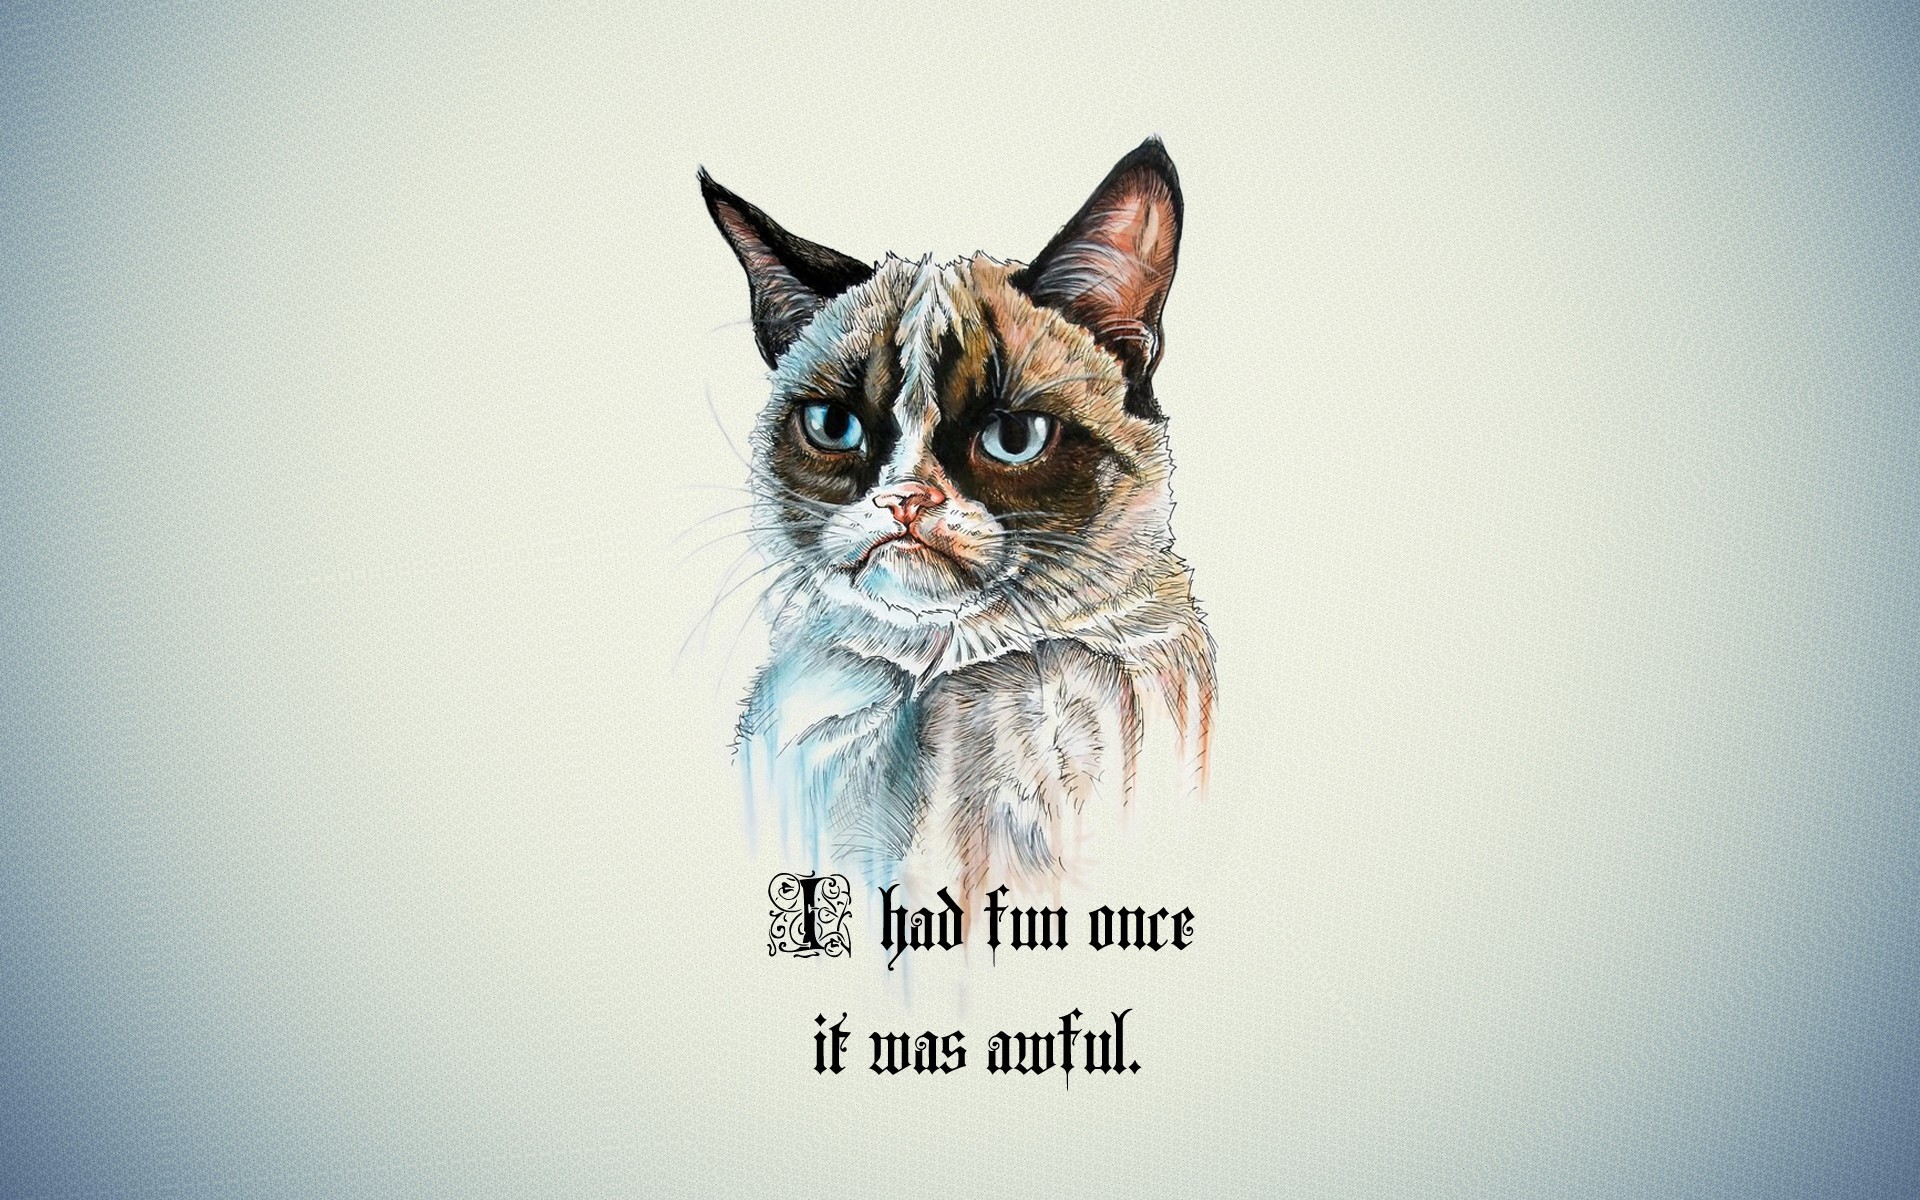 humor, cat, grumpy cat, statement, cats